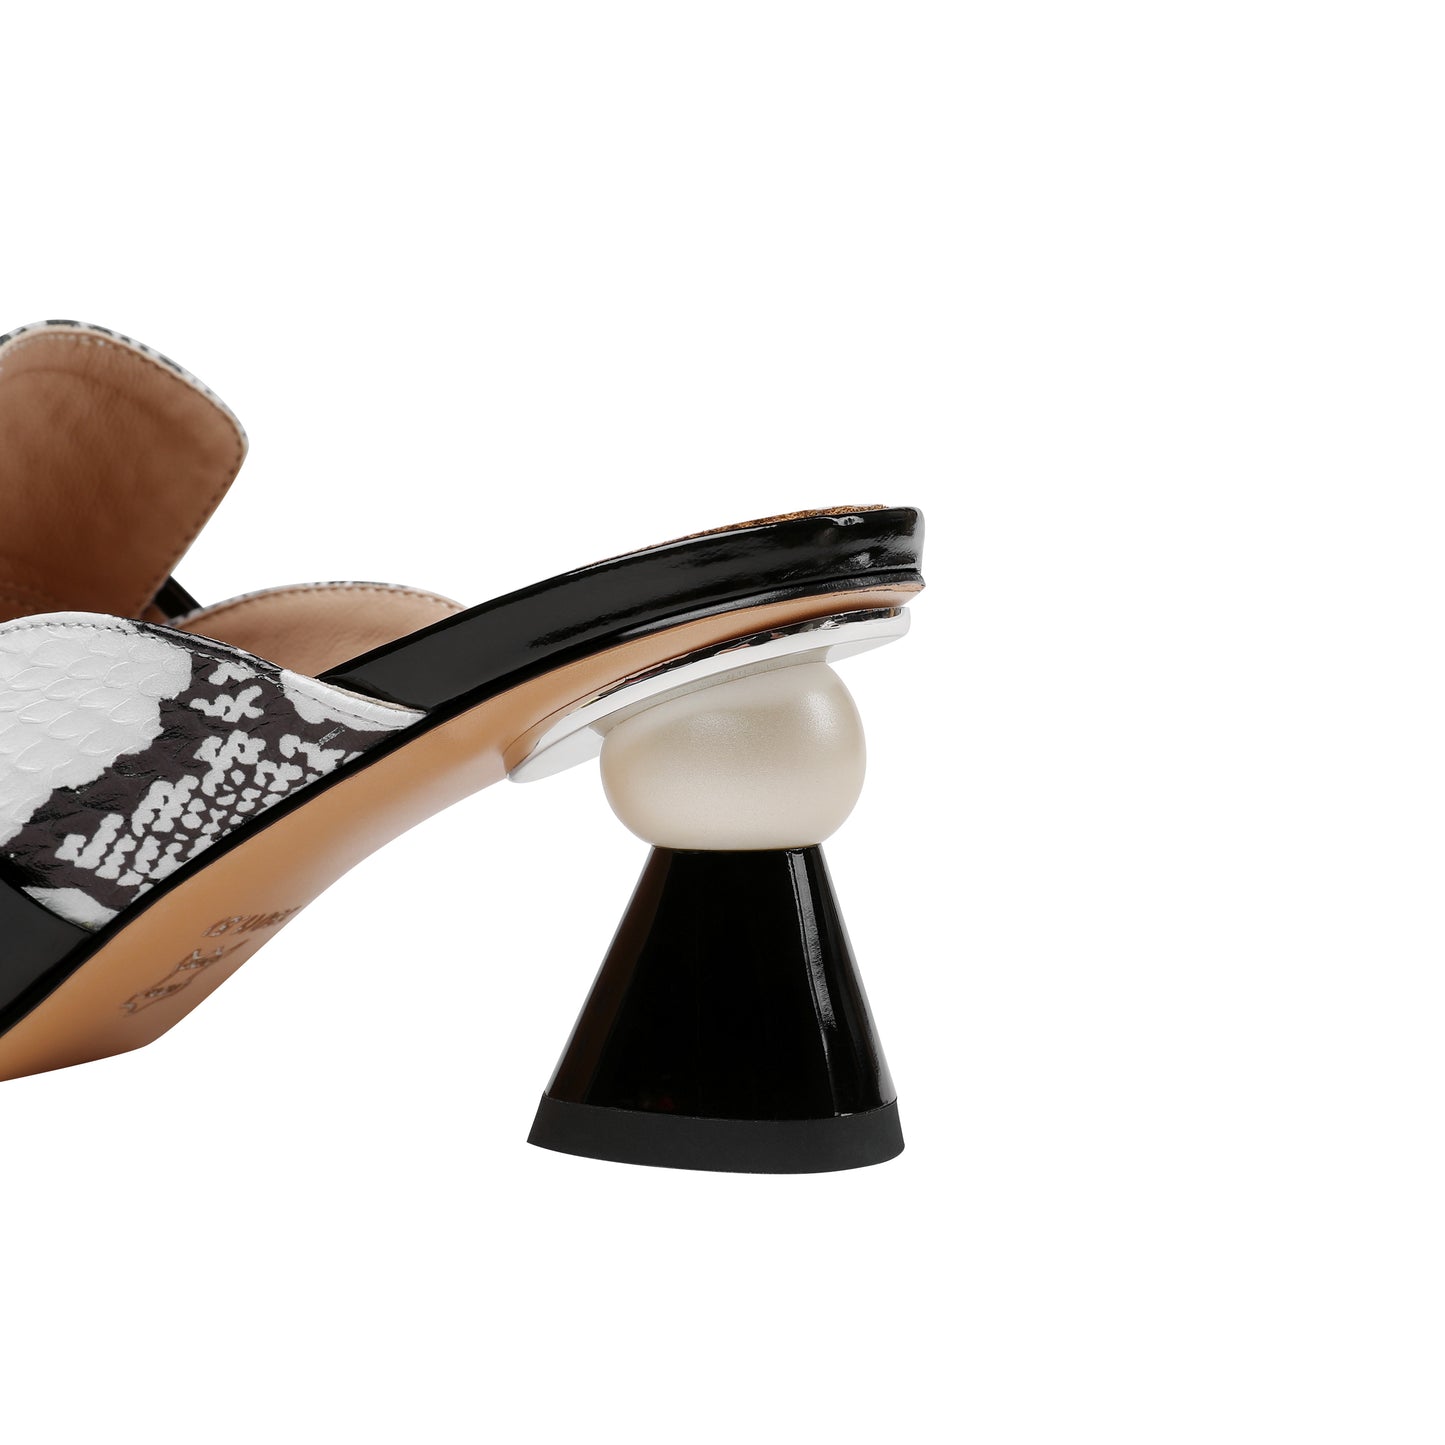 TinaCus Women's Handmade Leather Comfortable Unique Design Heel Peep Toe Slip On Mule Pumps